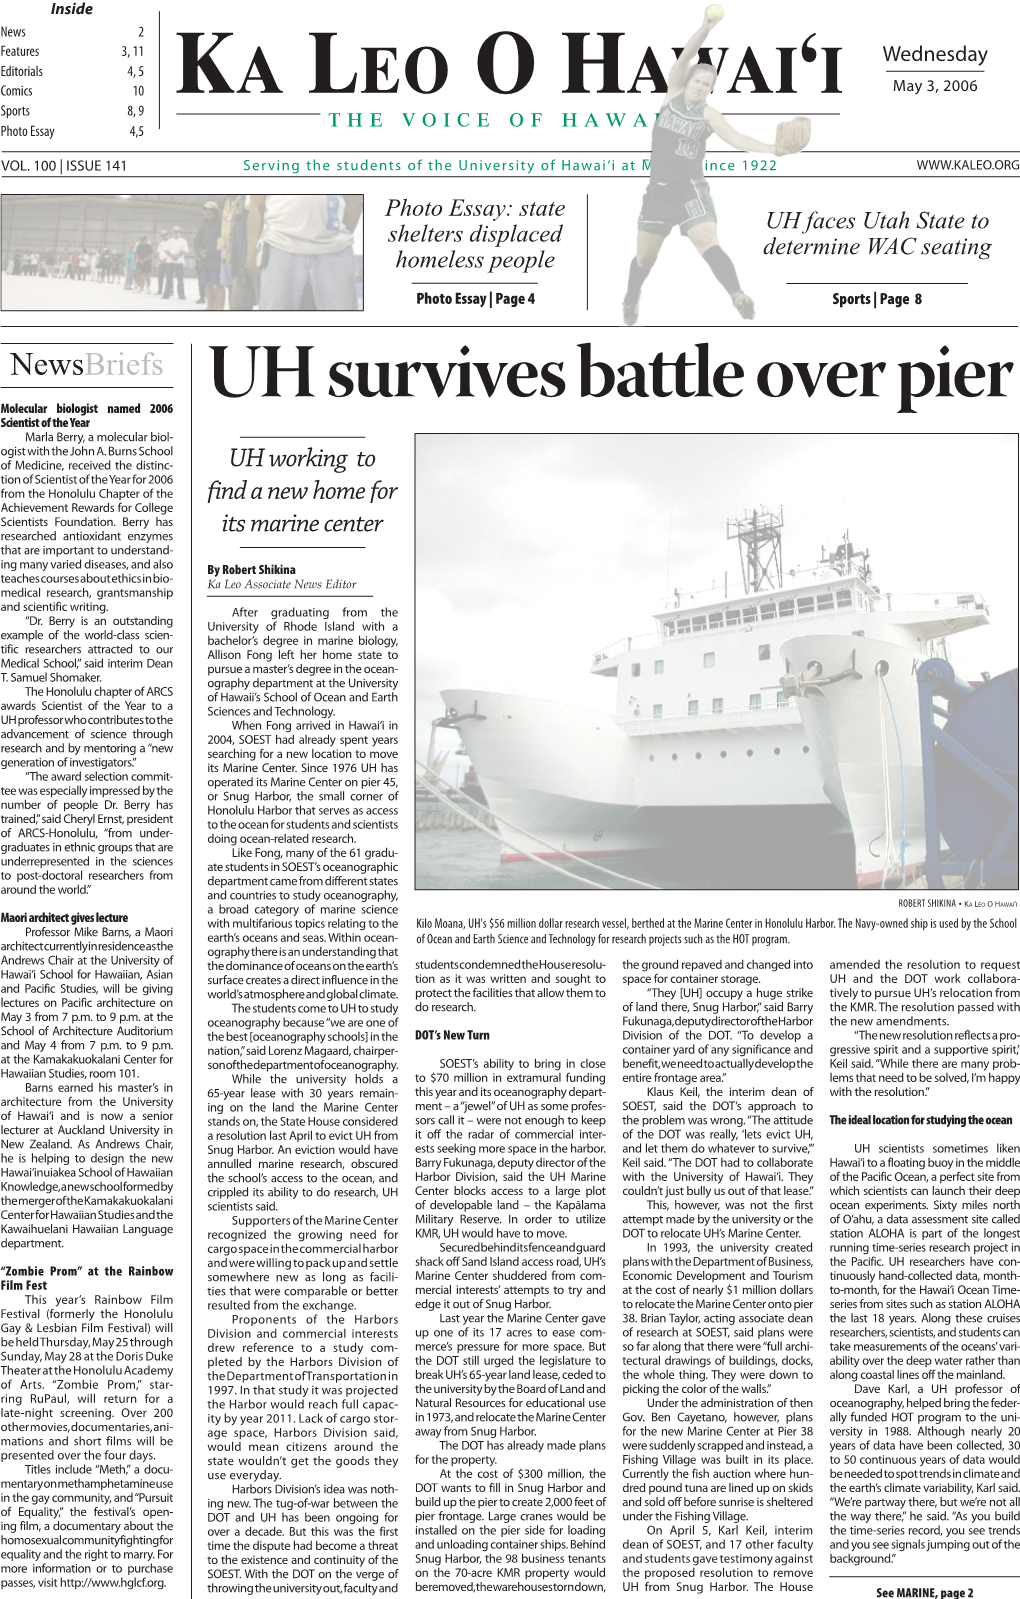 UH Survives Battle Over Pier Marla Berry, a Molecular Biol- Ogist with the John A